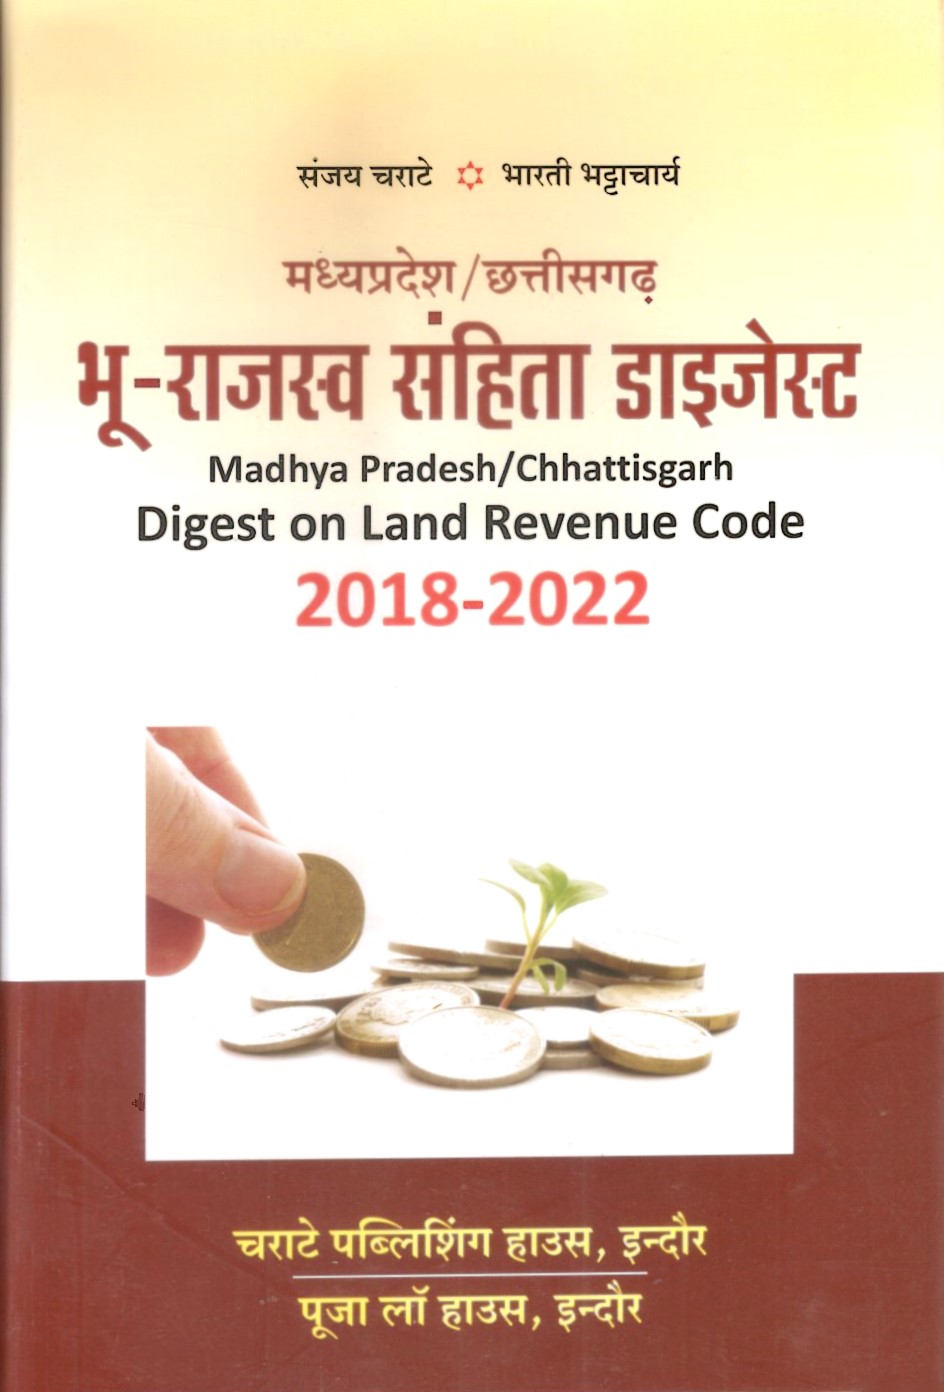 मध्य प्रदेश/छत्तीसगढ़ भू - राजस्व संहिता डाइजेस्ट - Madhya Pradesh/Chhattisgarh Digest on Land Revenue Code 2018 - 2022